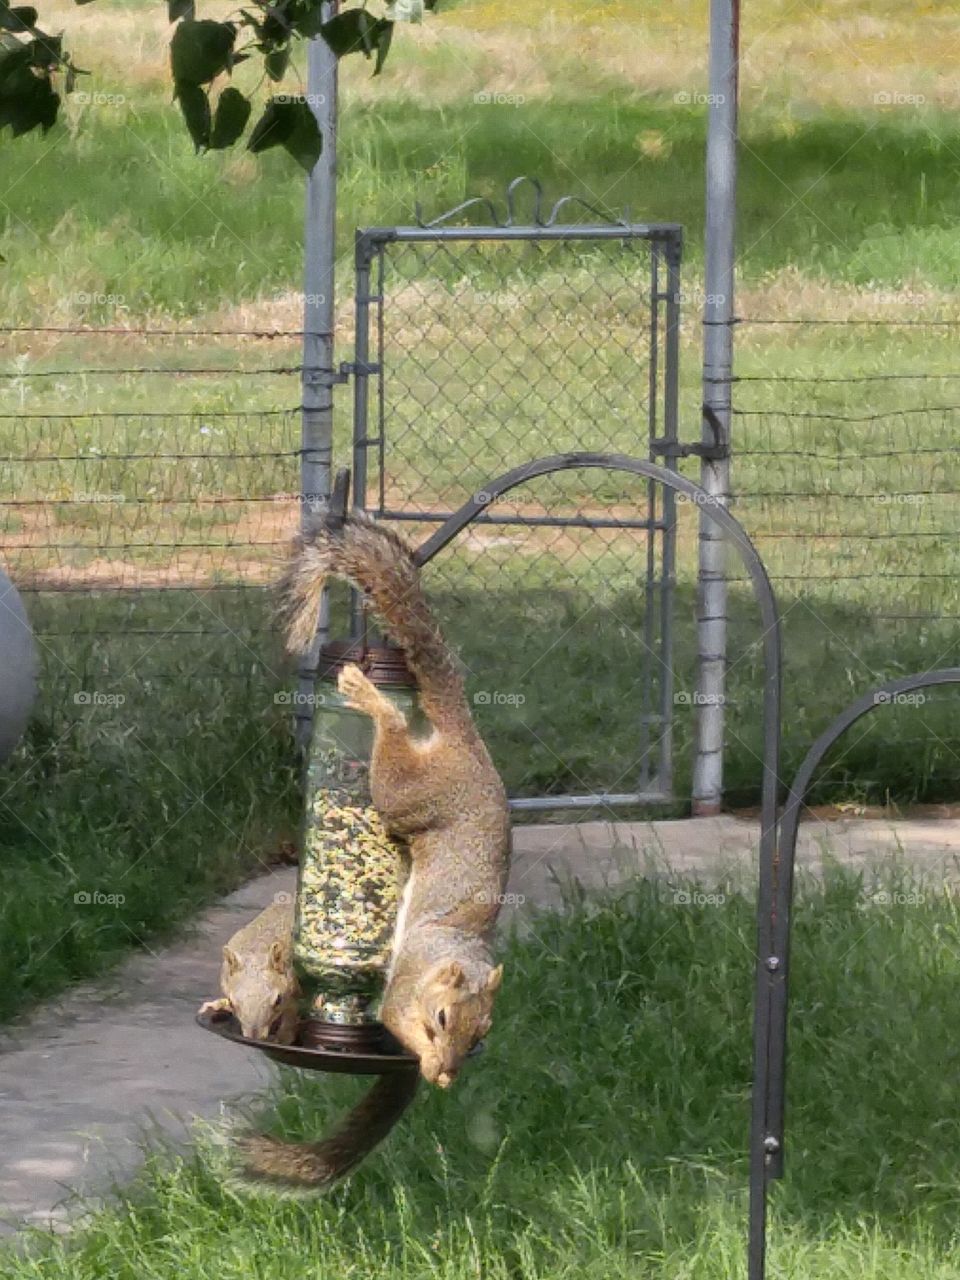 squirrels robbing a bird feeder